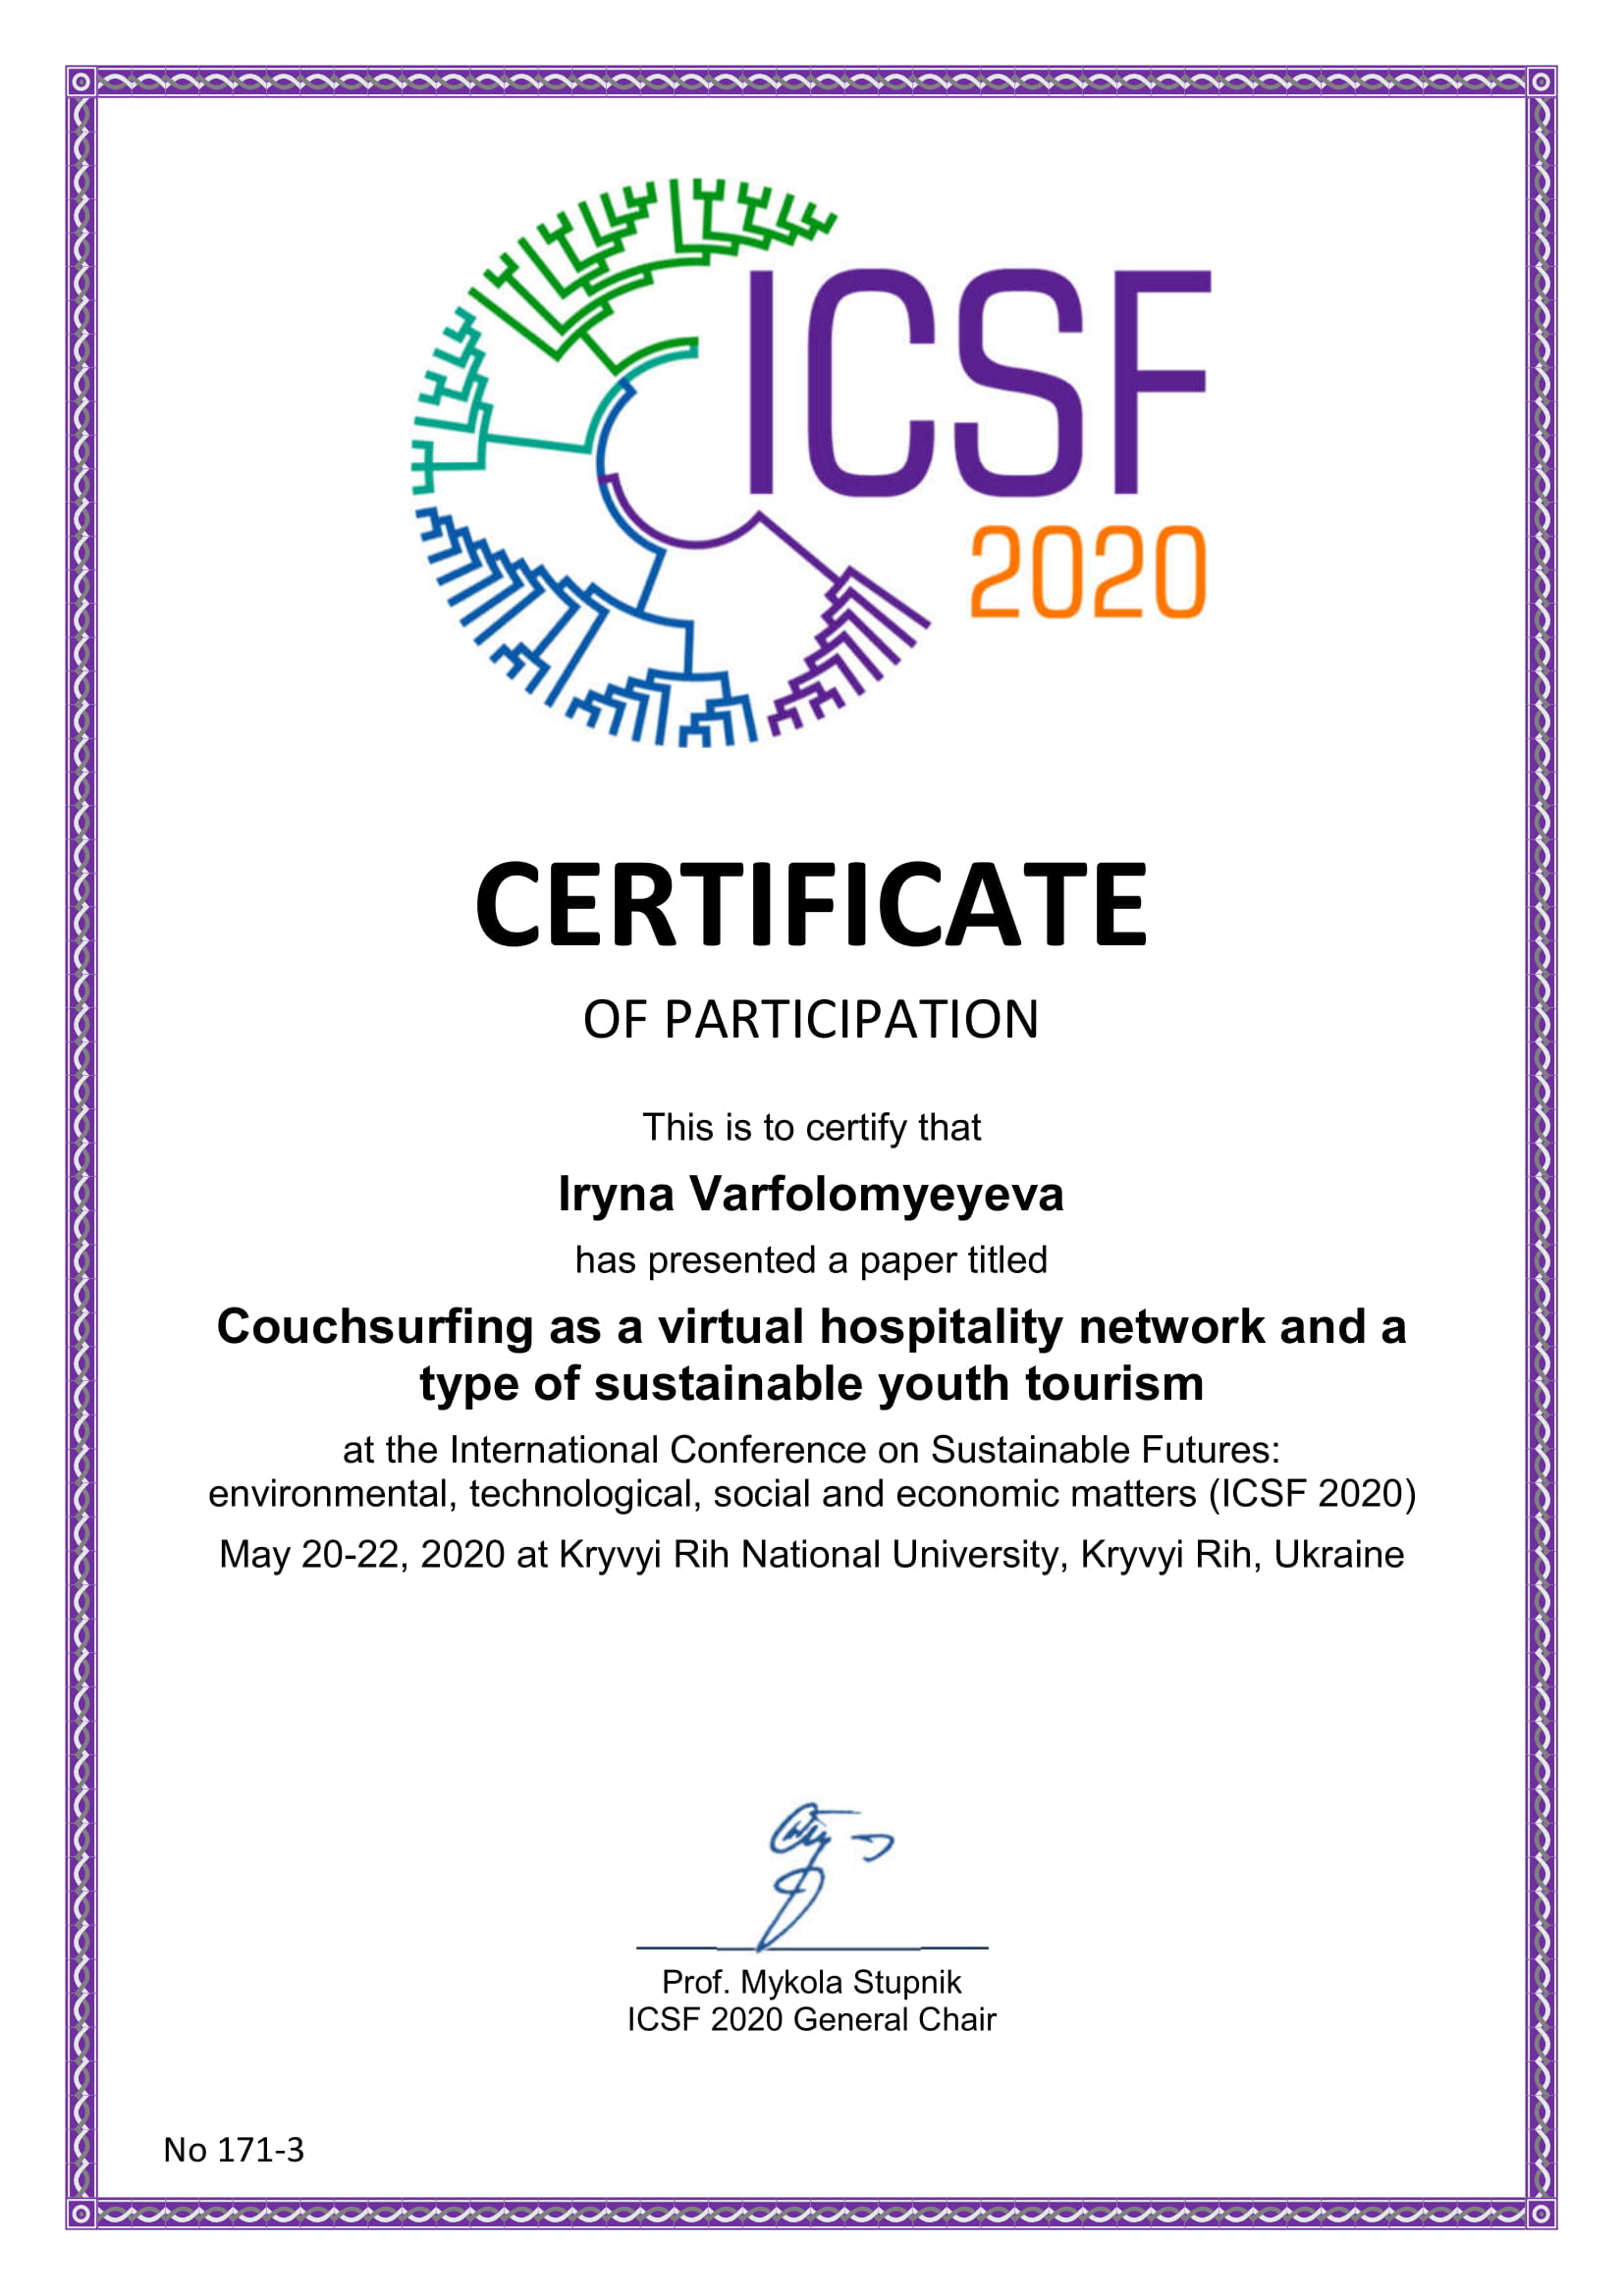 ICSF2020 certificate 413 1